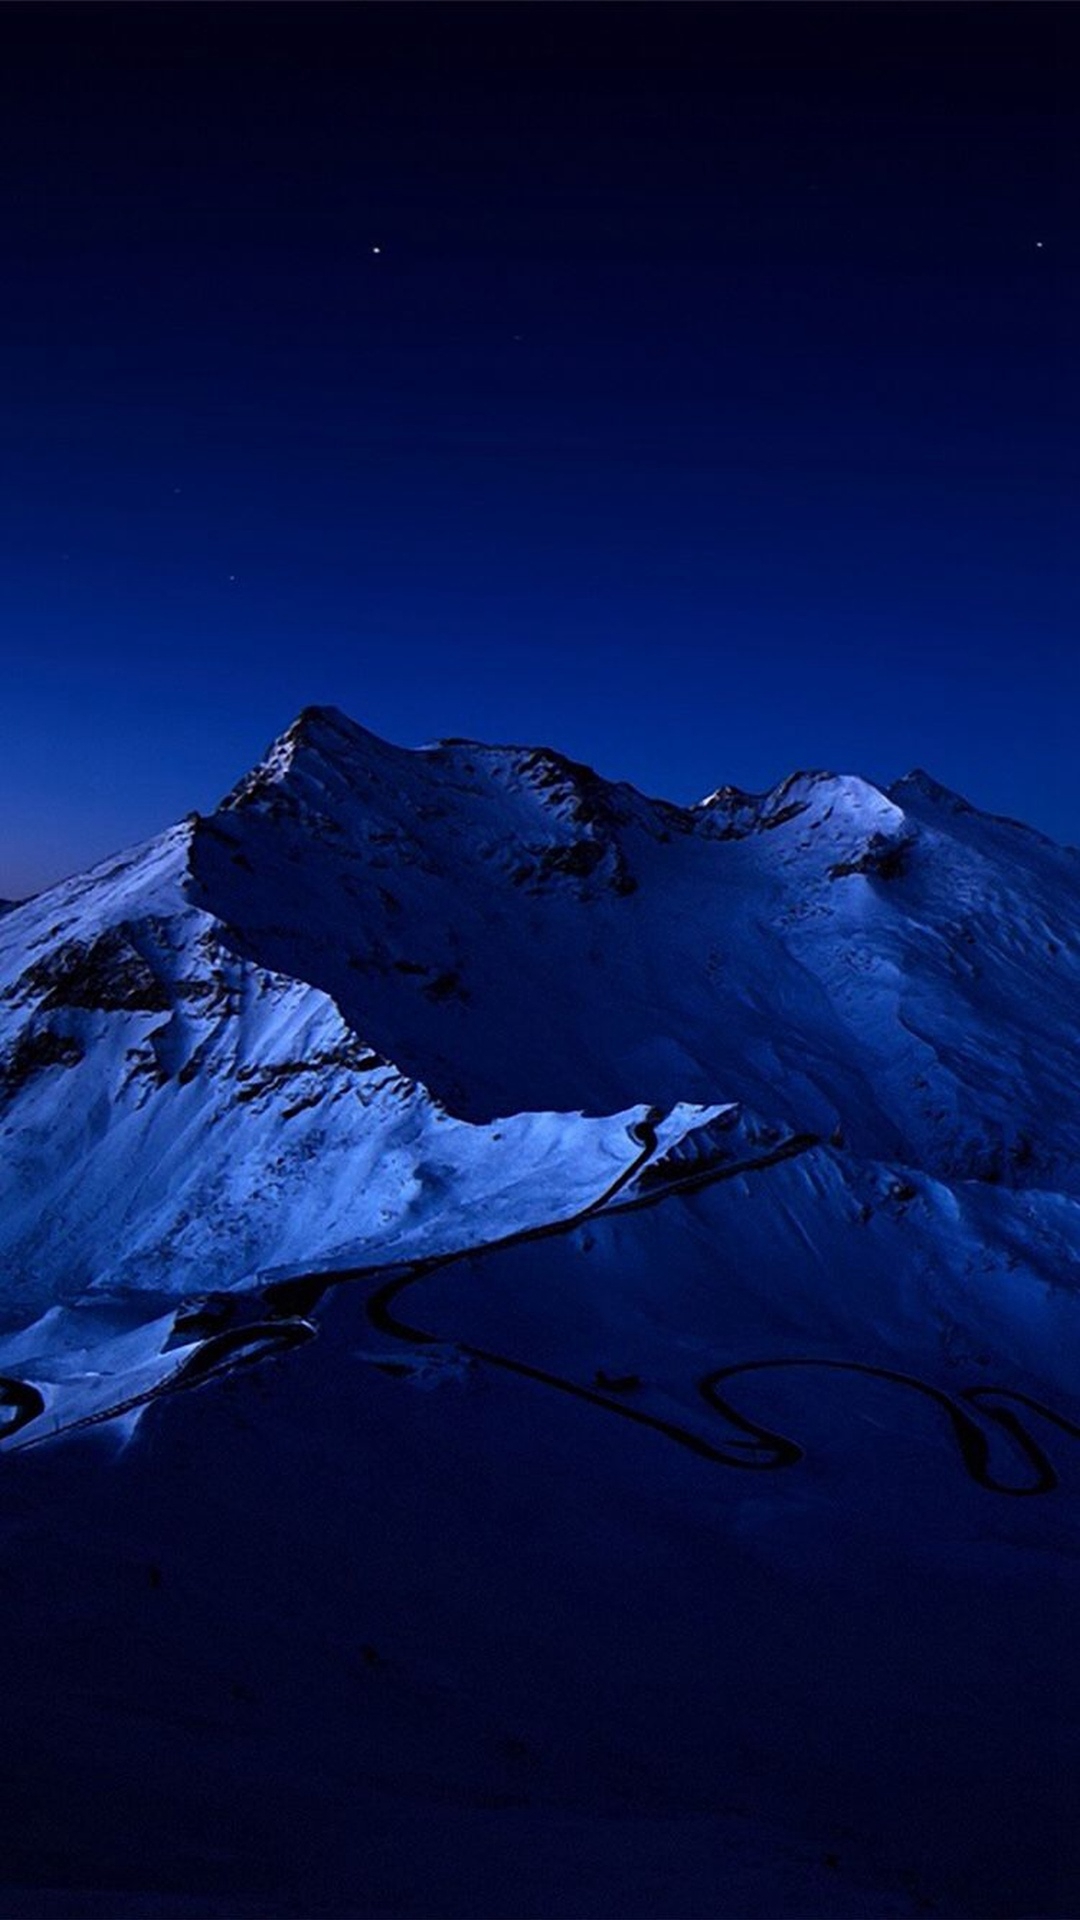 Night Sky Over Snow Mountain Peak iPhone Wallpaper